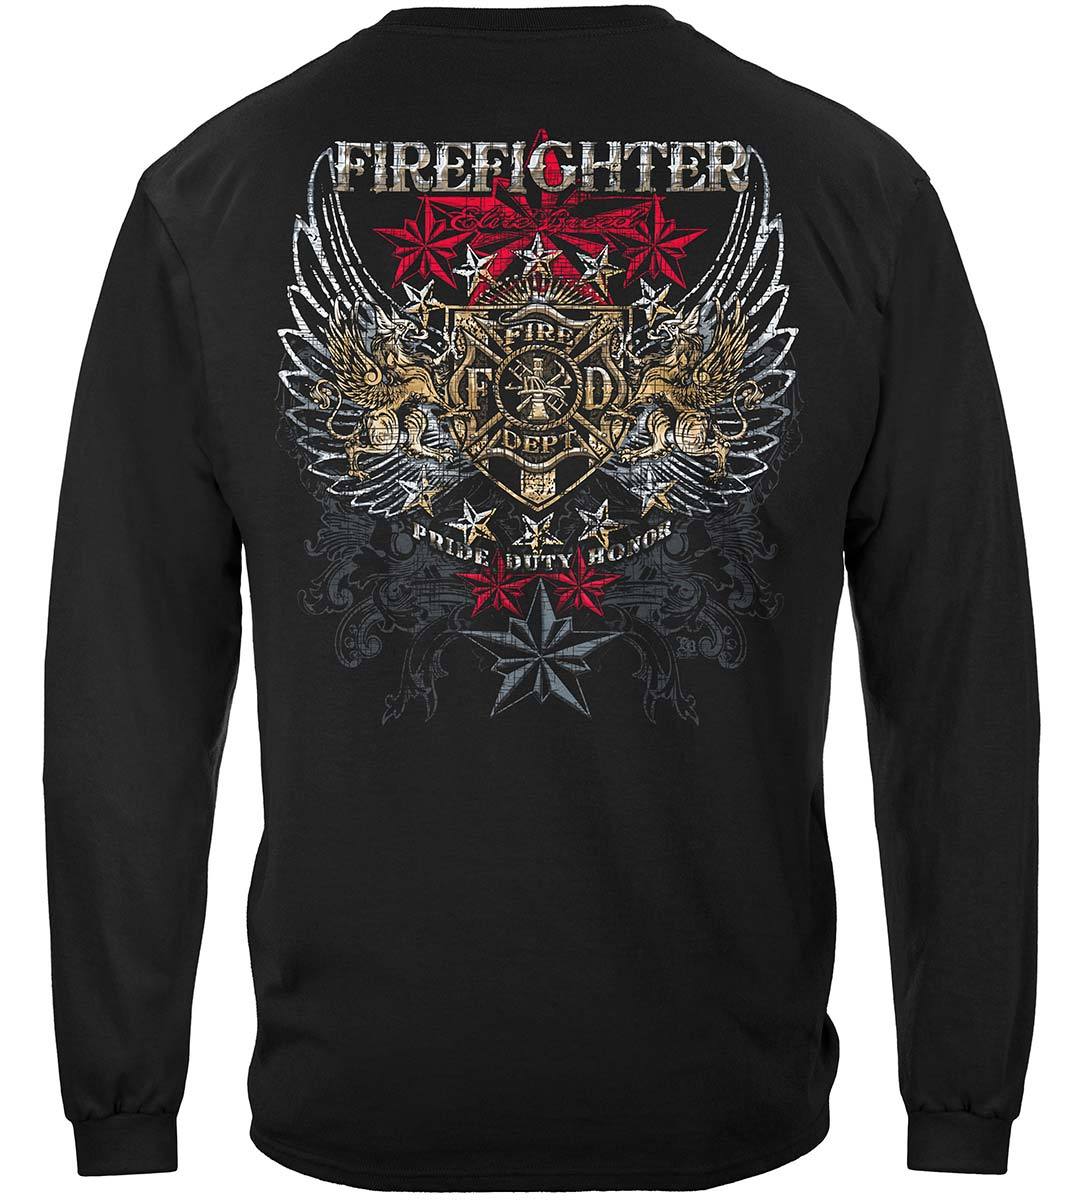 Elite Breed Firefighter Pride Duty Honor Silver Foil Premium Long Sleeves